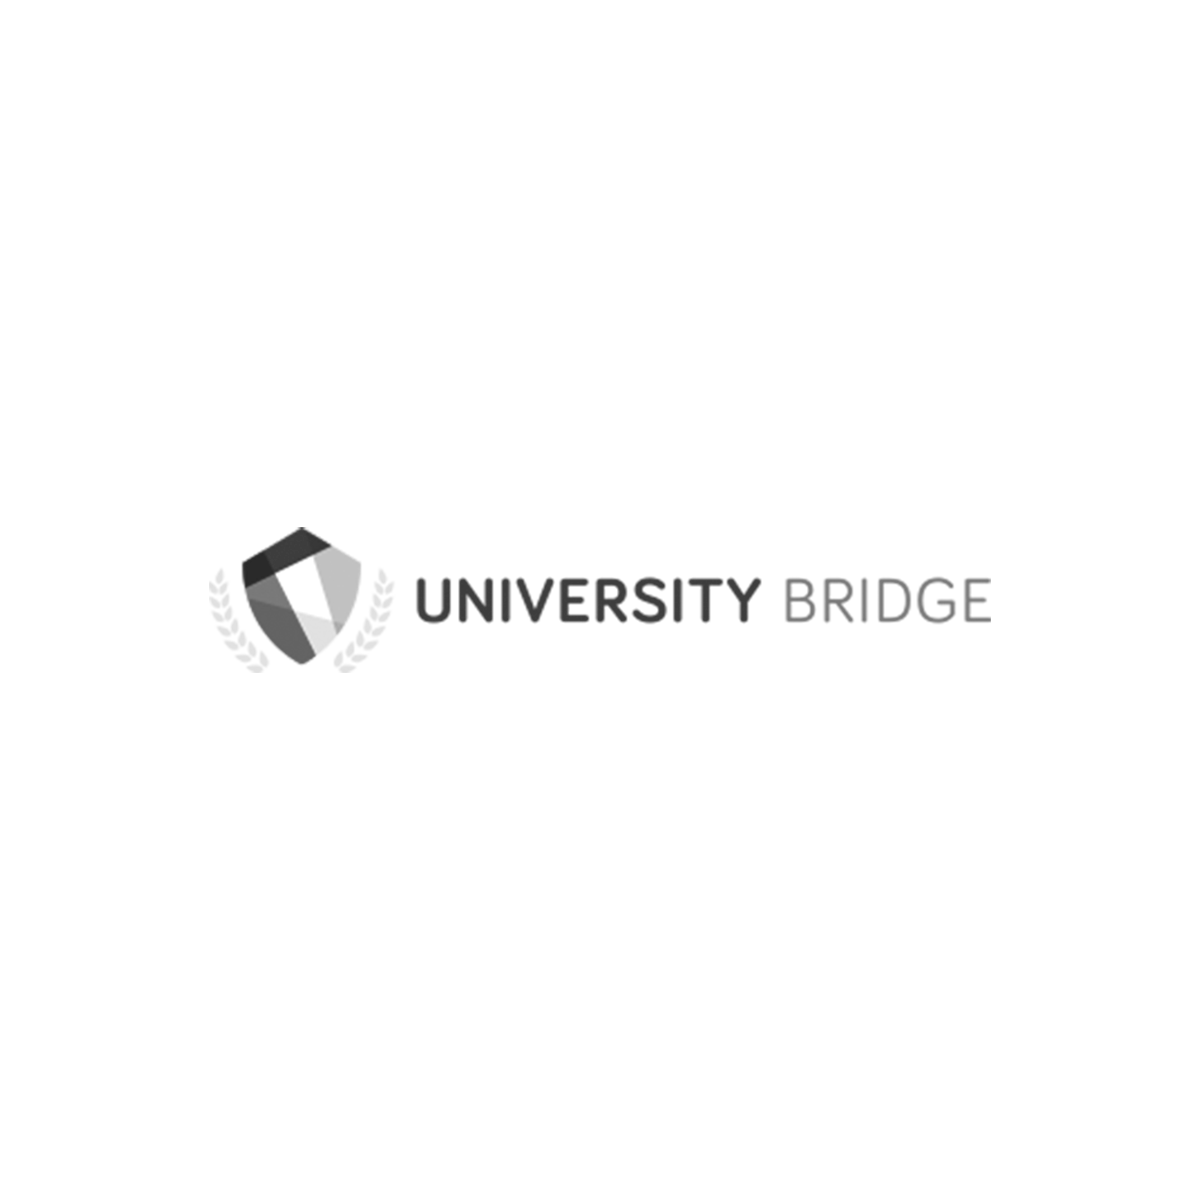 University Bridge grayscalebig.png